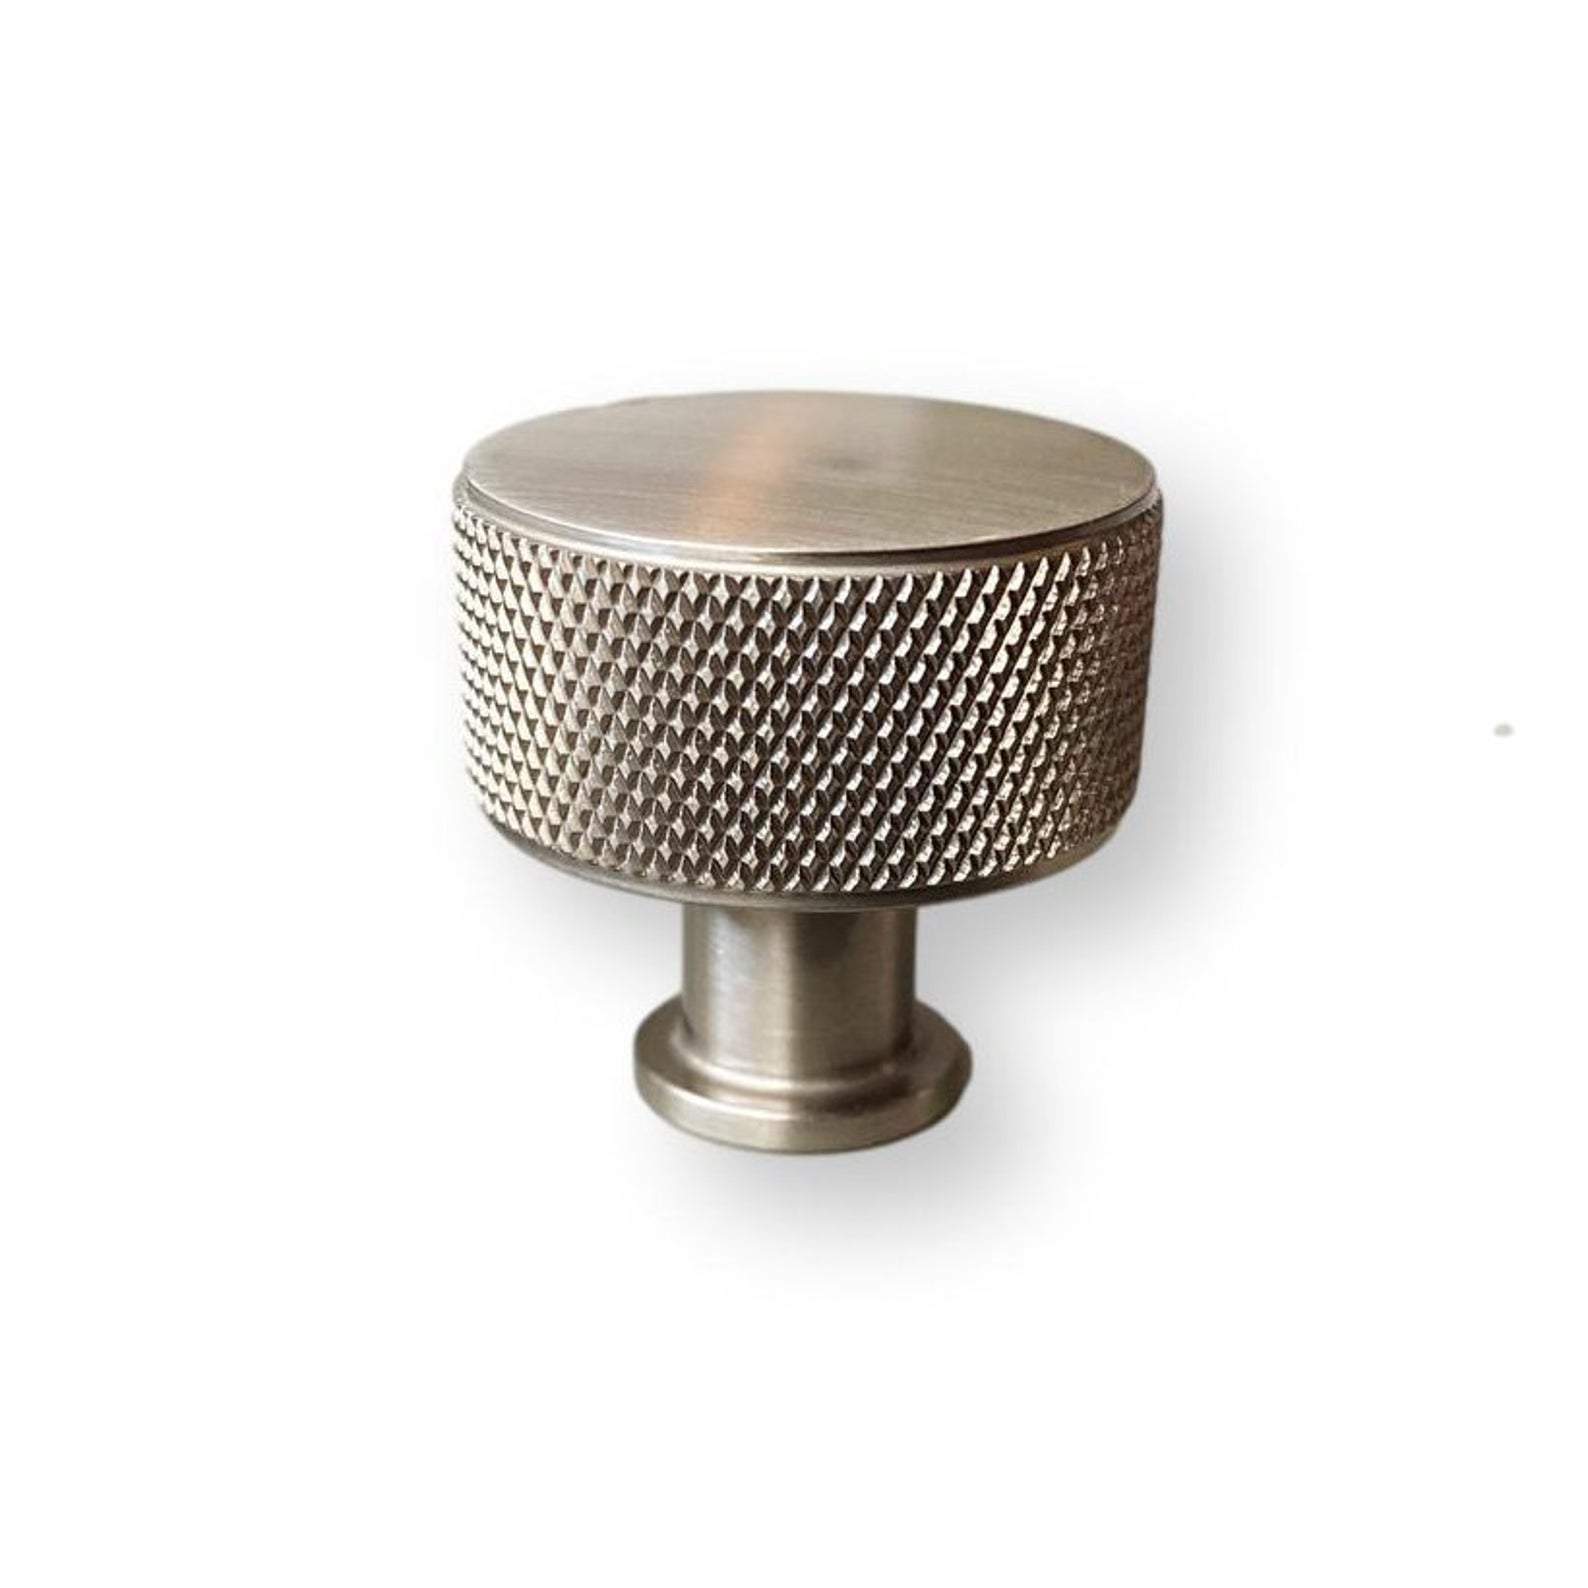 Knurled Round Knob "Texture" Cabinet Knob in Brushed Nickel | Knobs